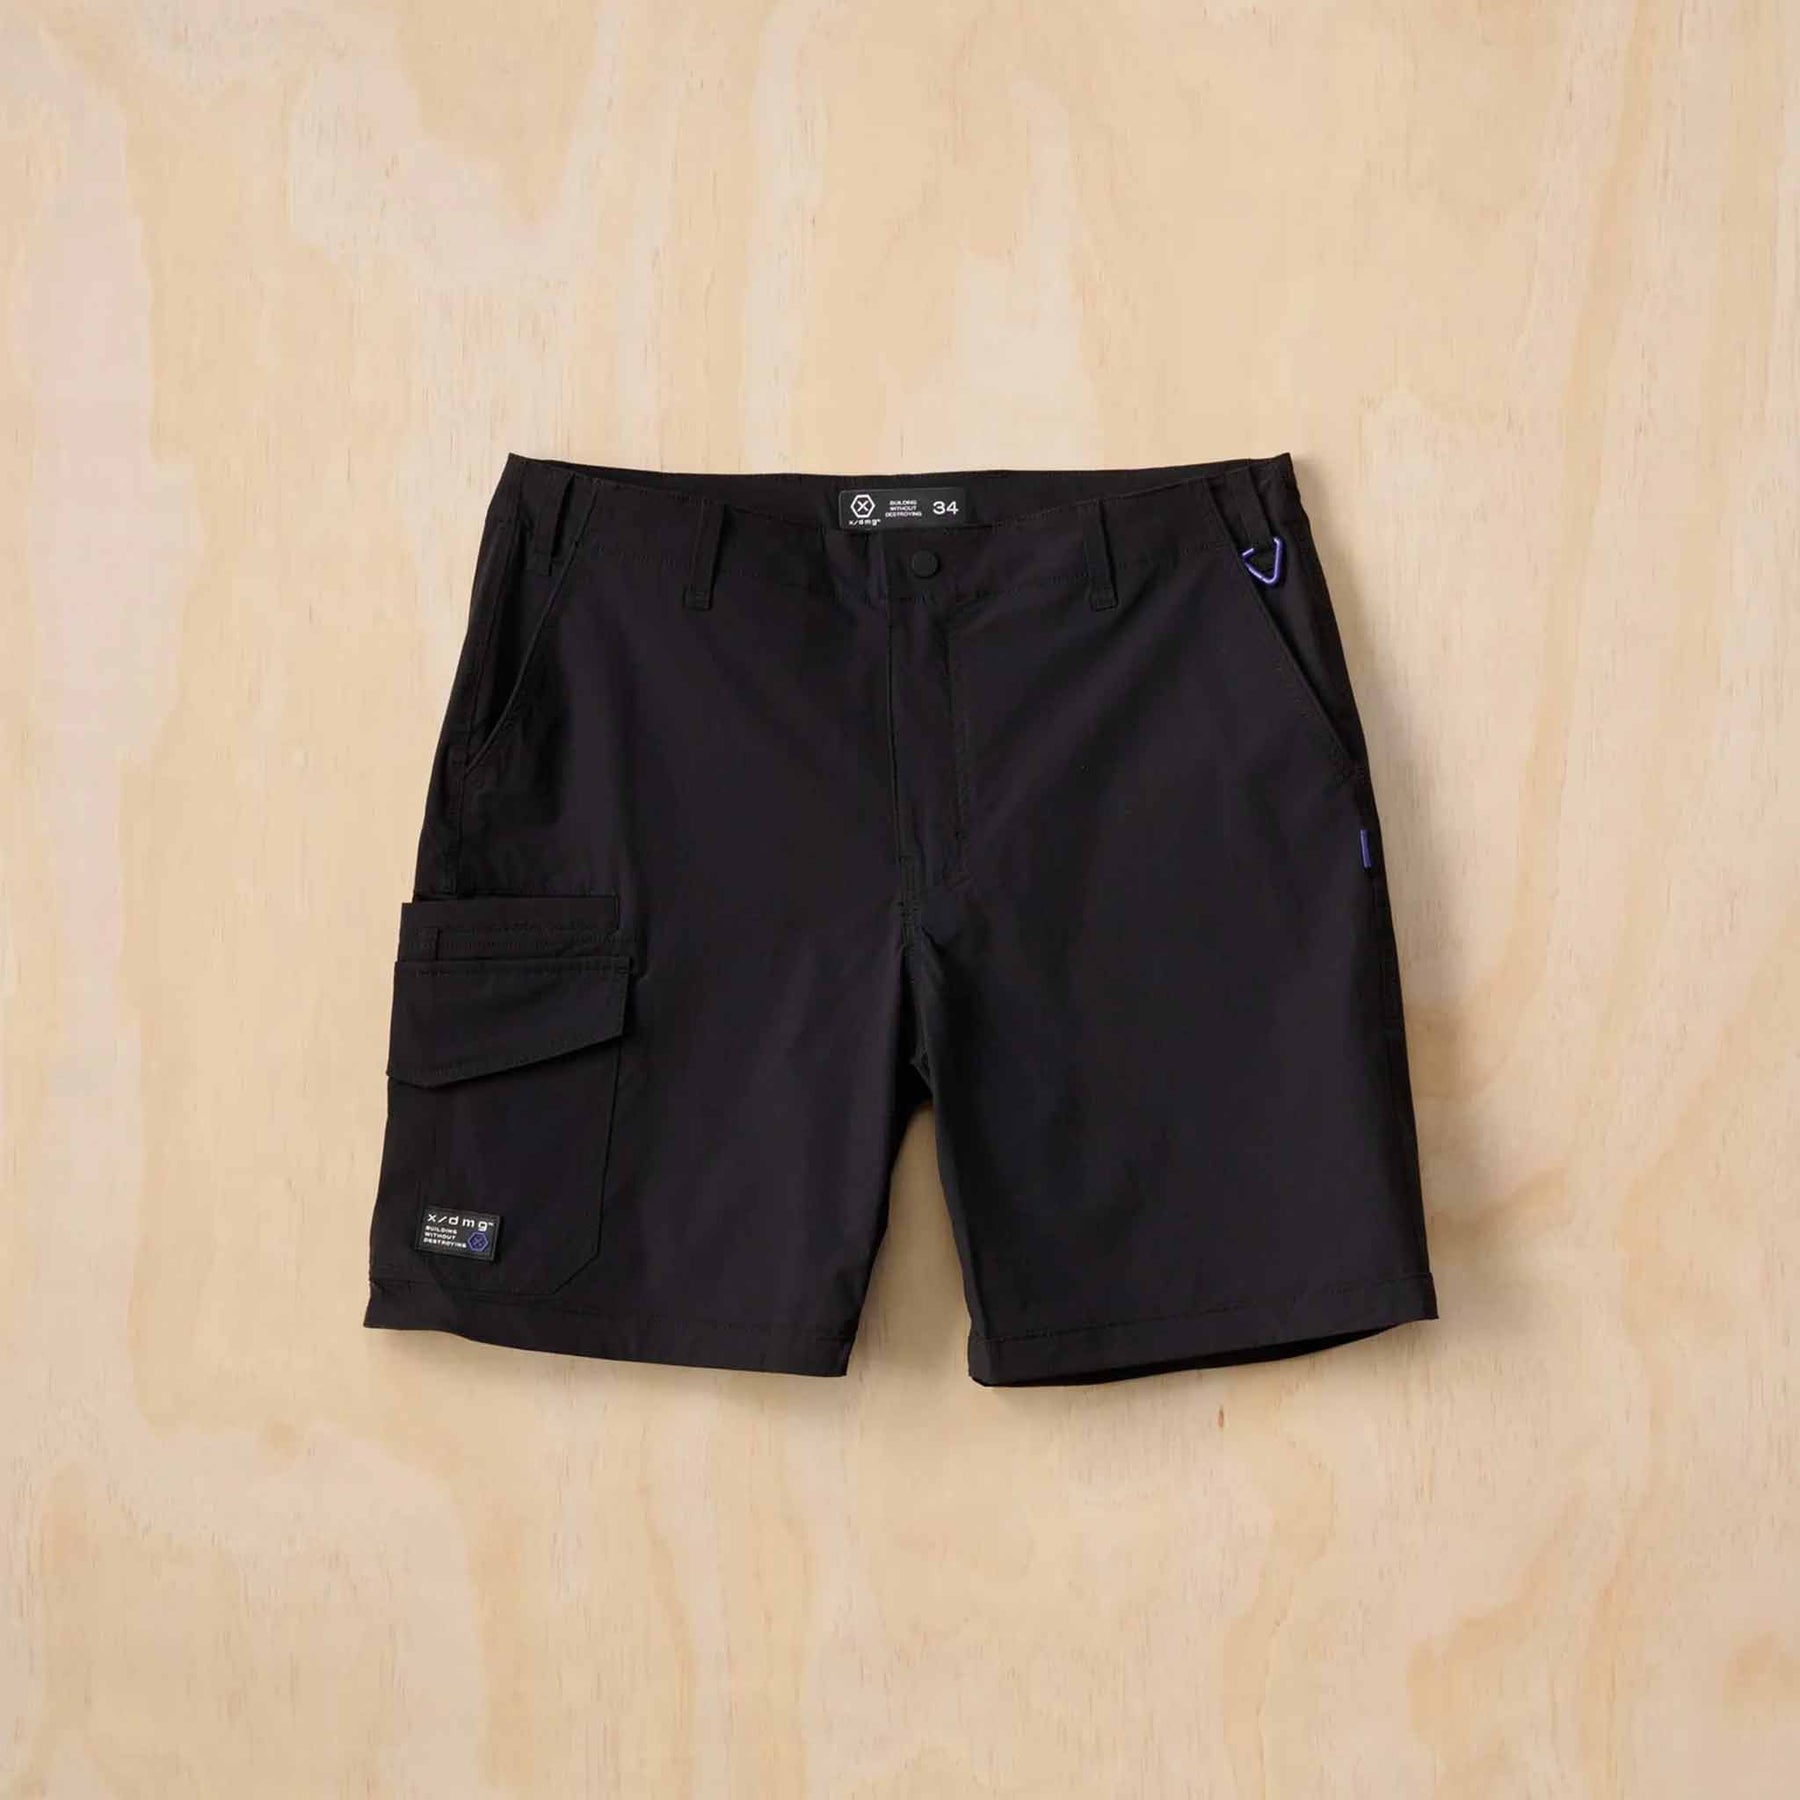 x/dmg lightweight nylon shorts in black